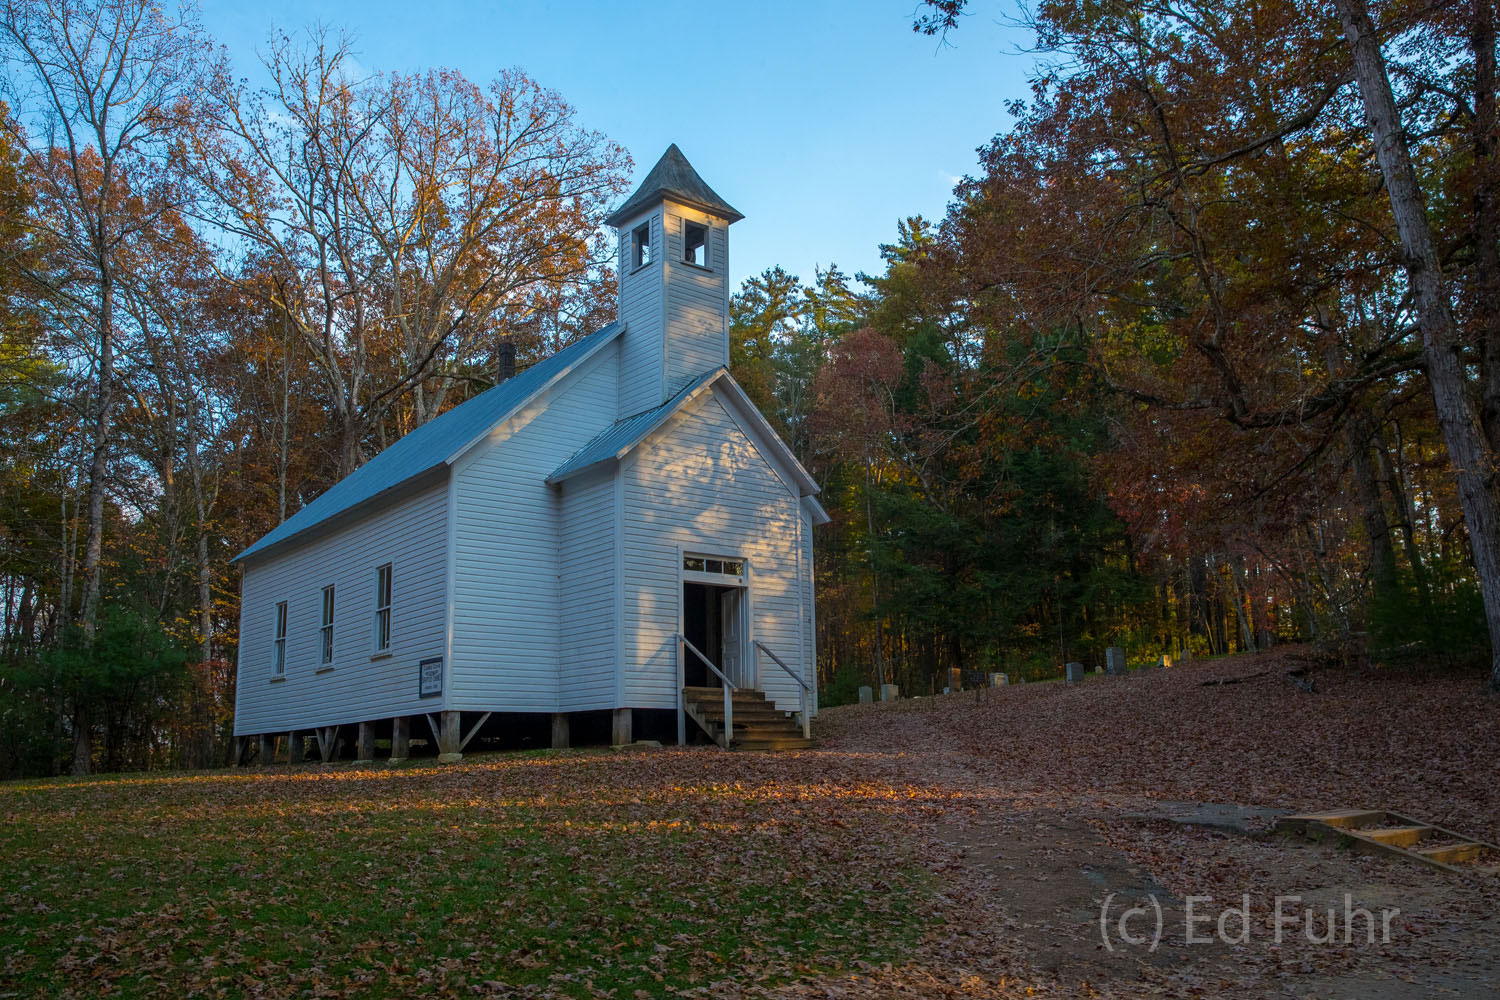 Autumn Colors fade near this historic church in Cades Cove.